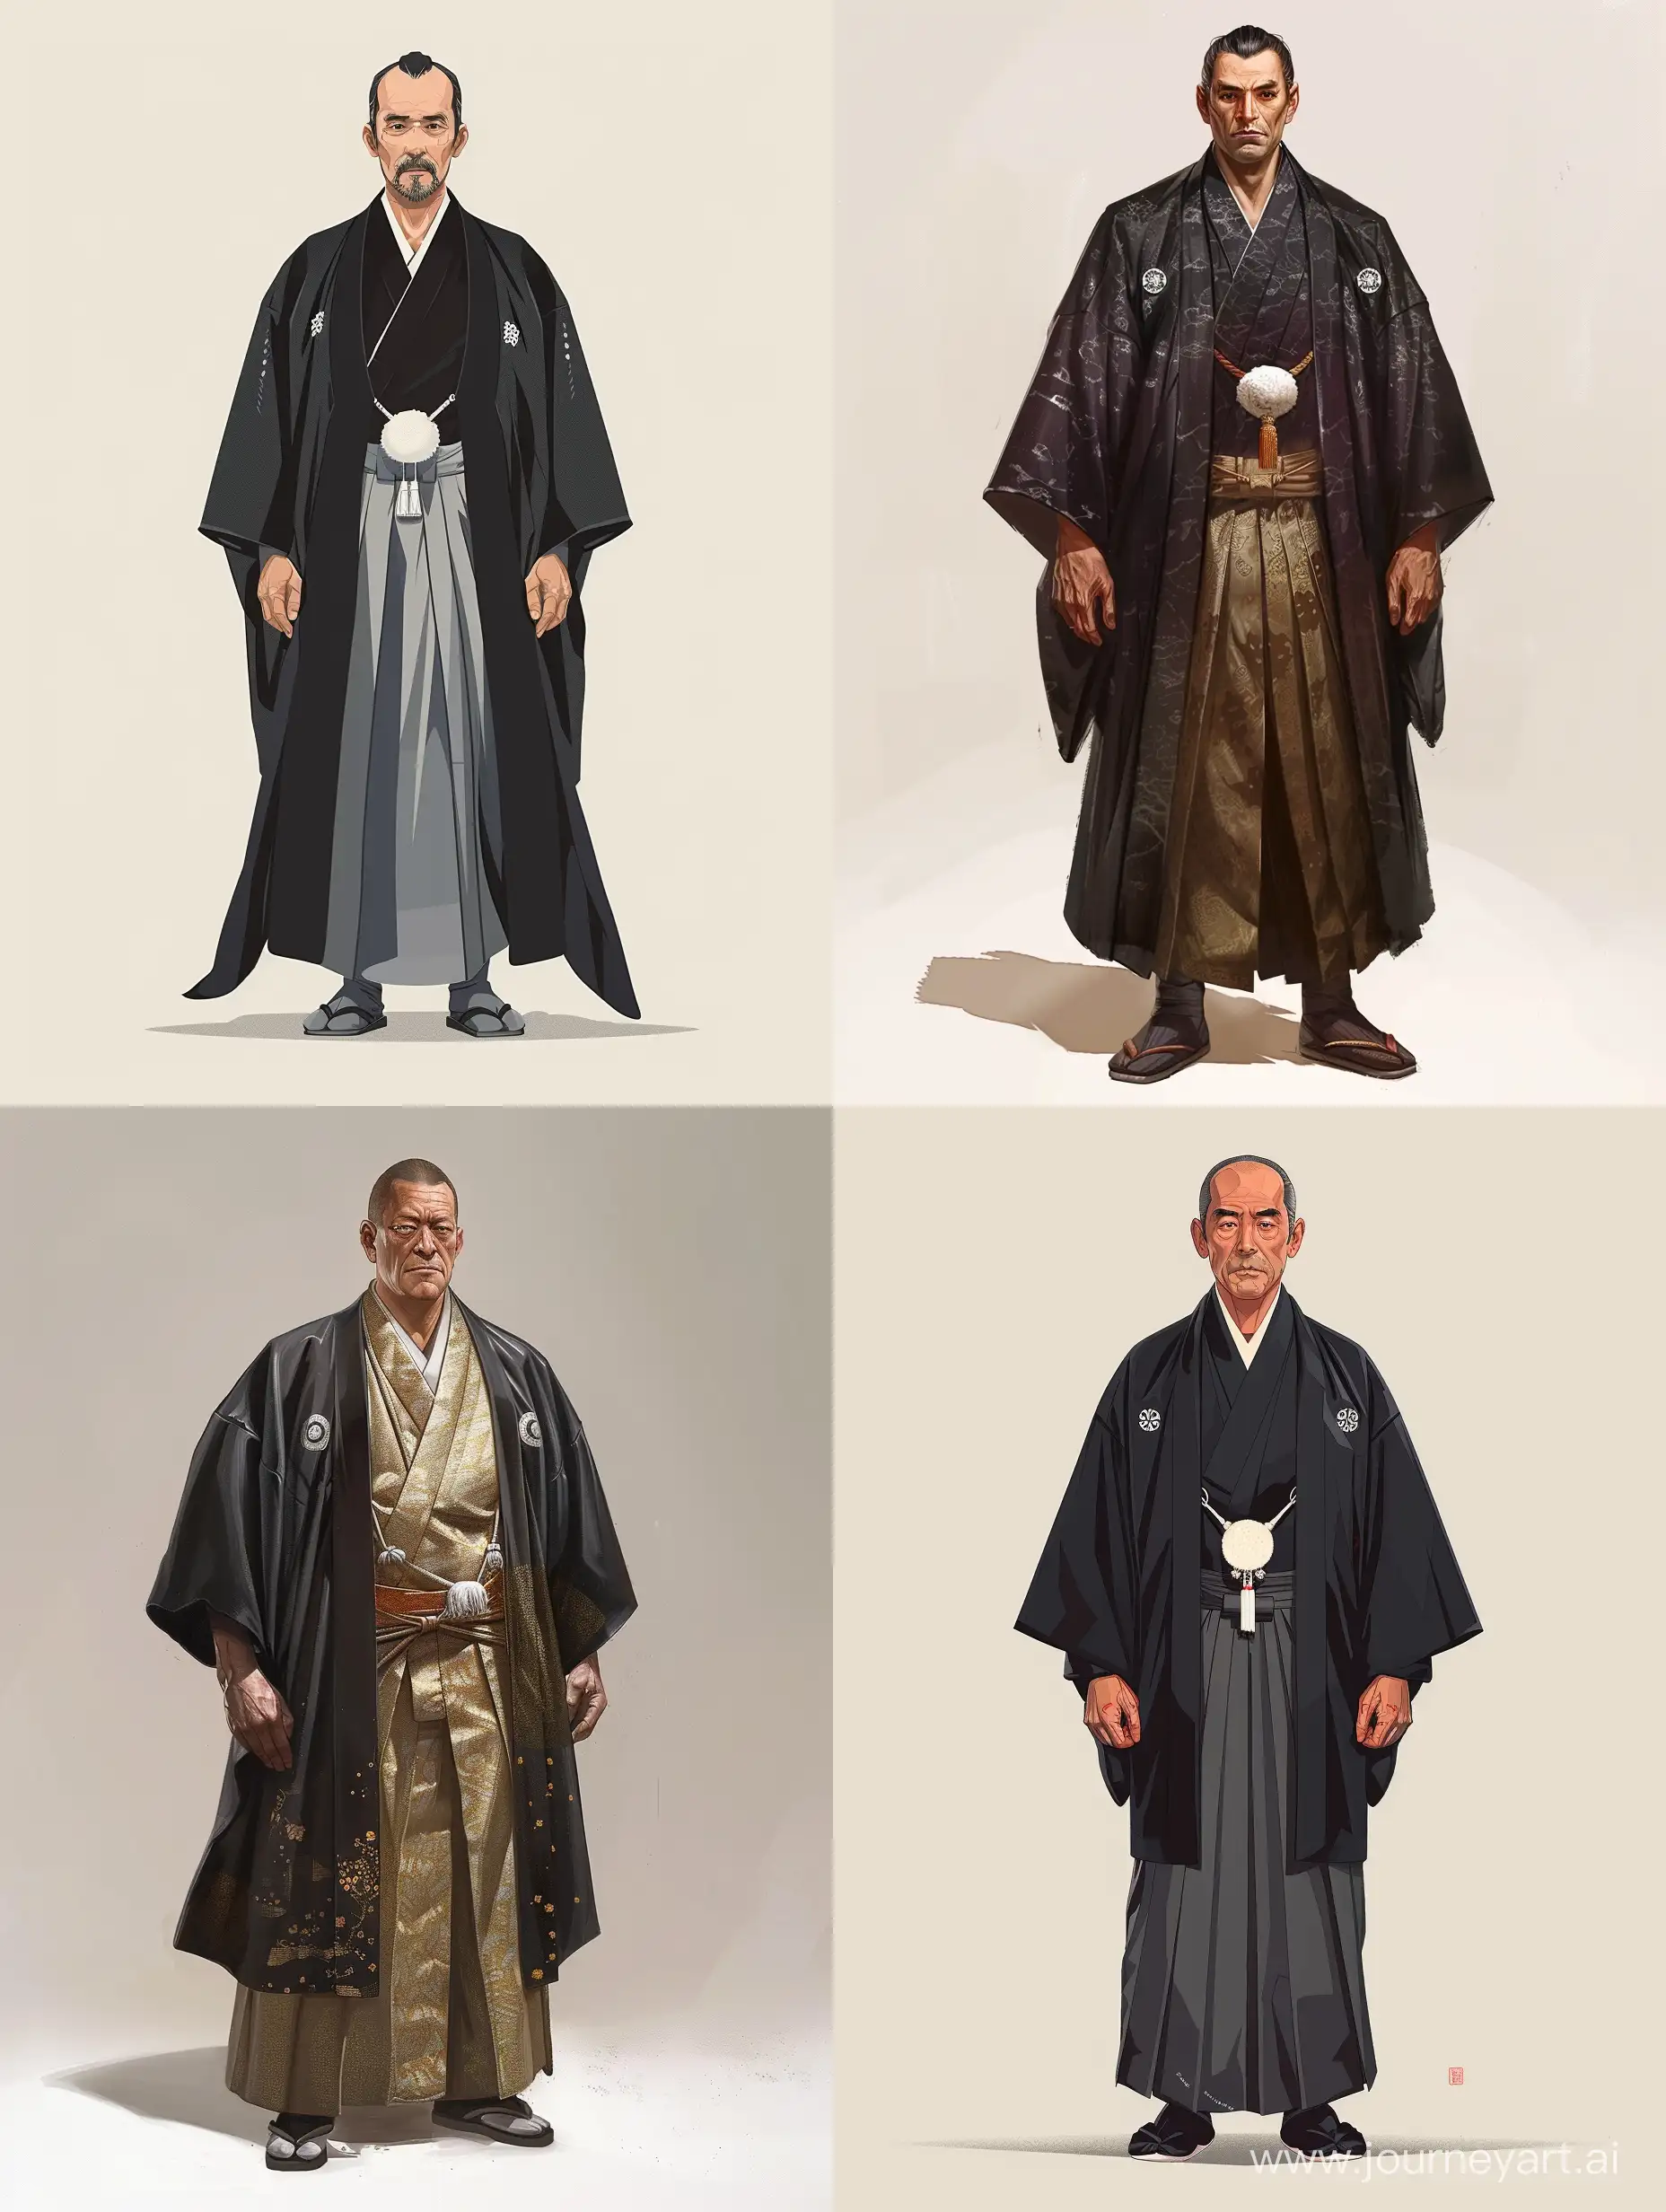 Traditional-Japanese-Authority-Serious-Man-in-Elegant-Attire-Illustration